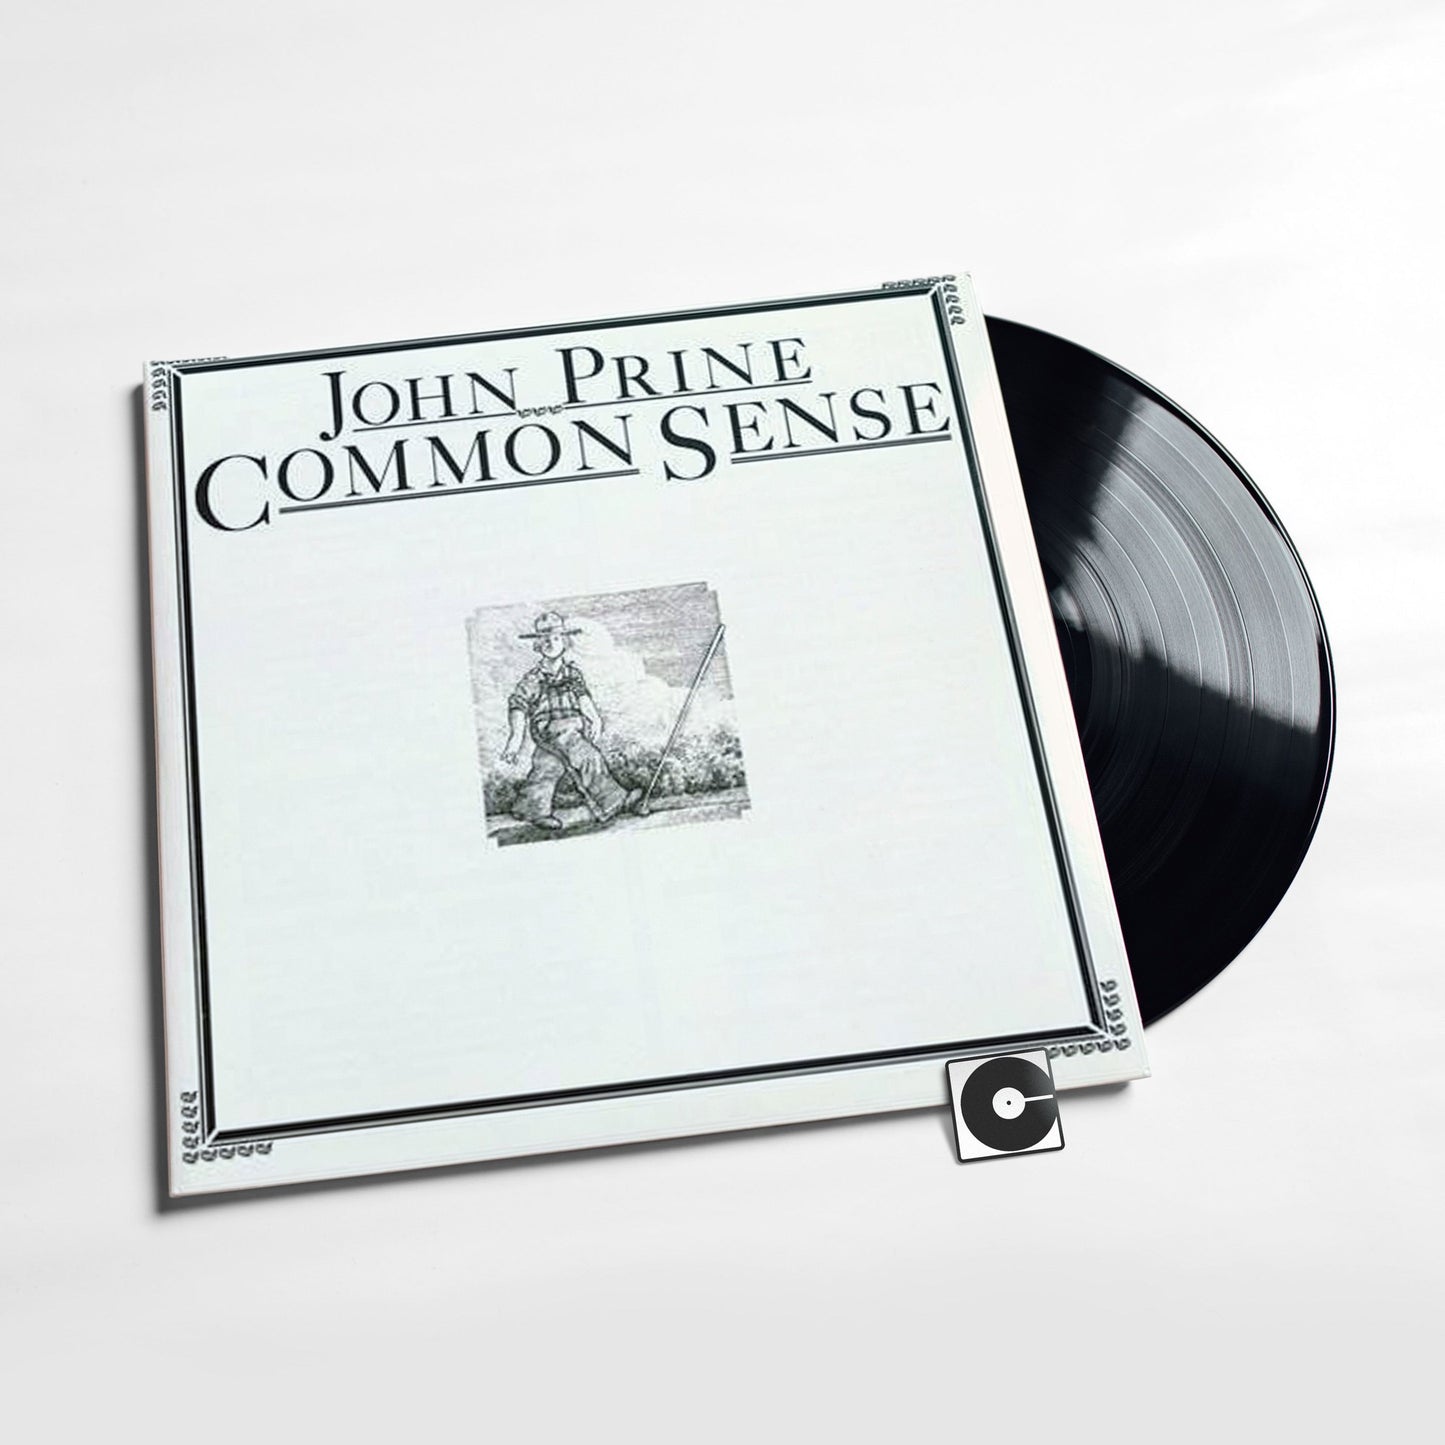 John Prine - "Common Sense"